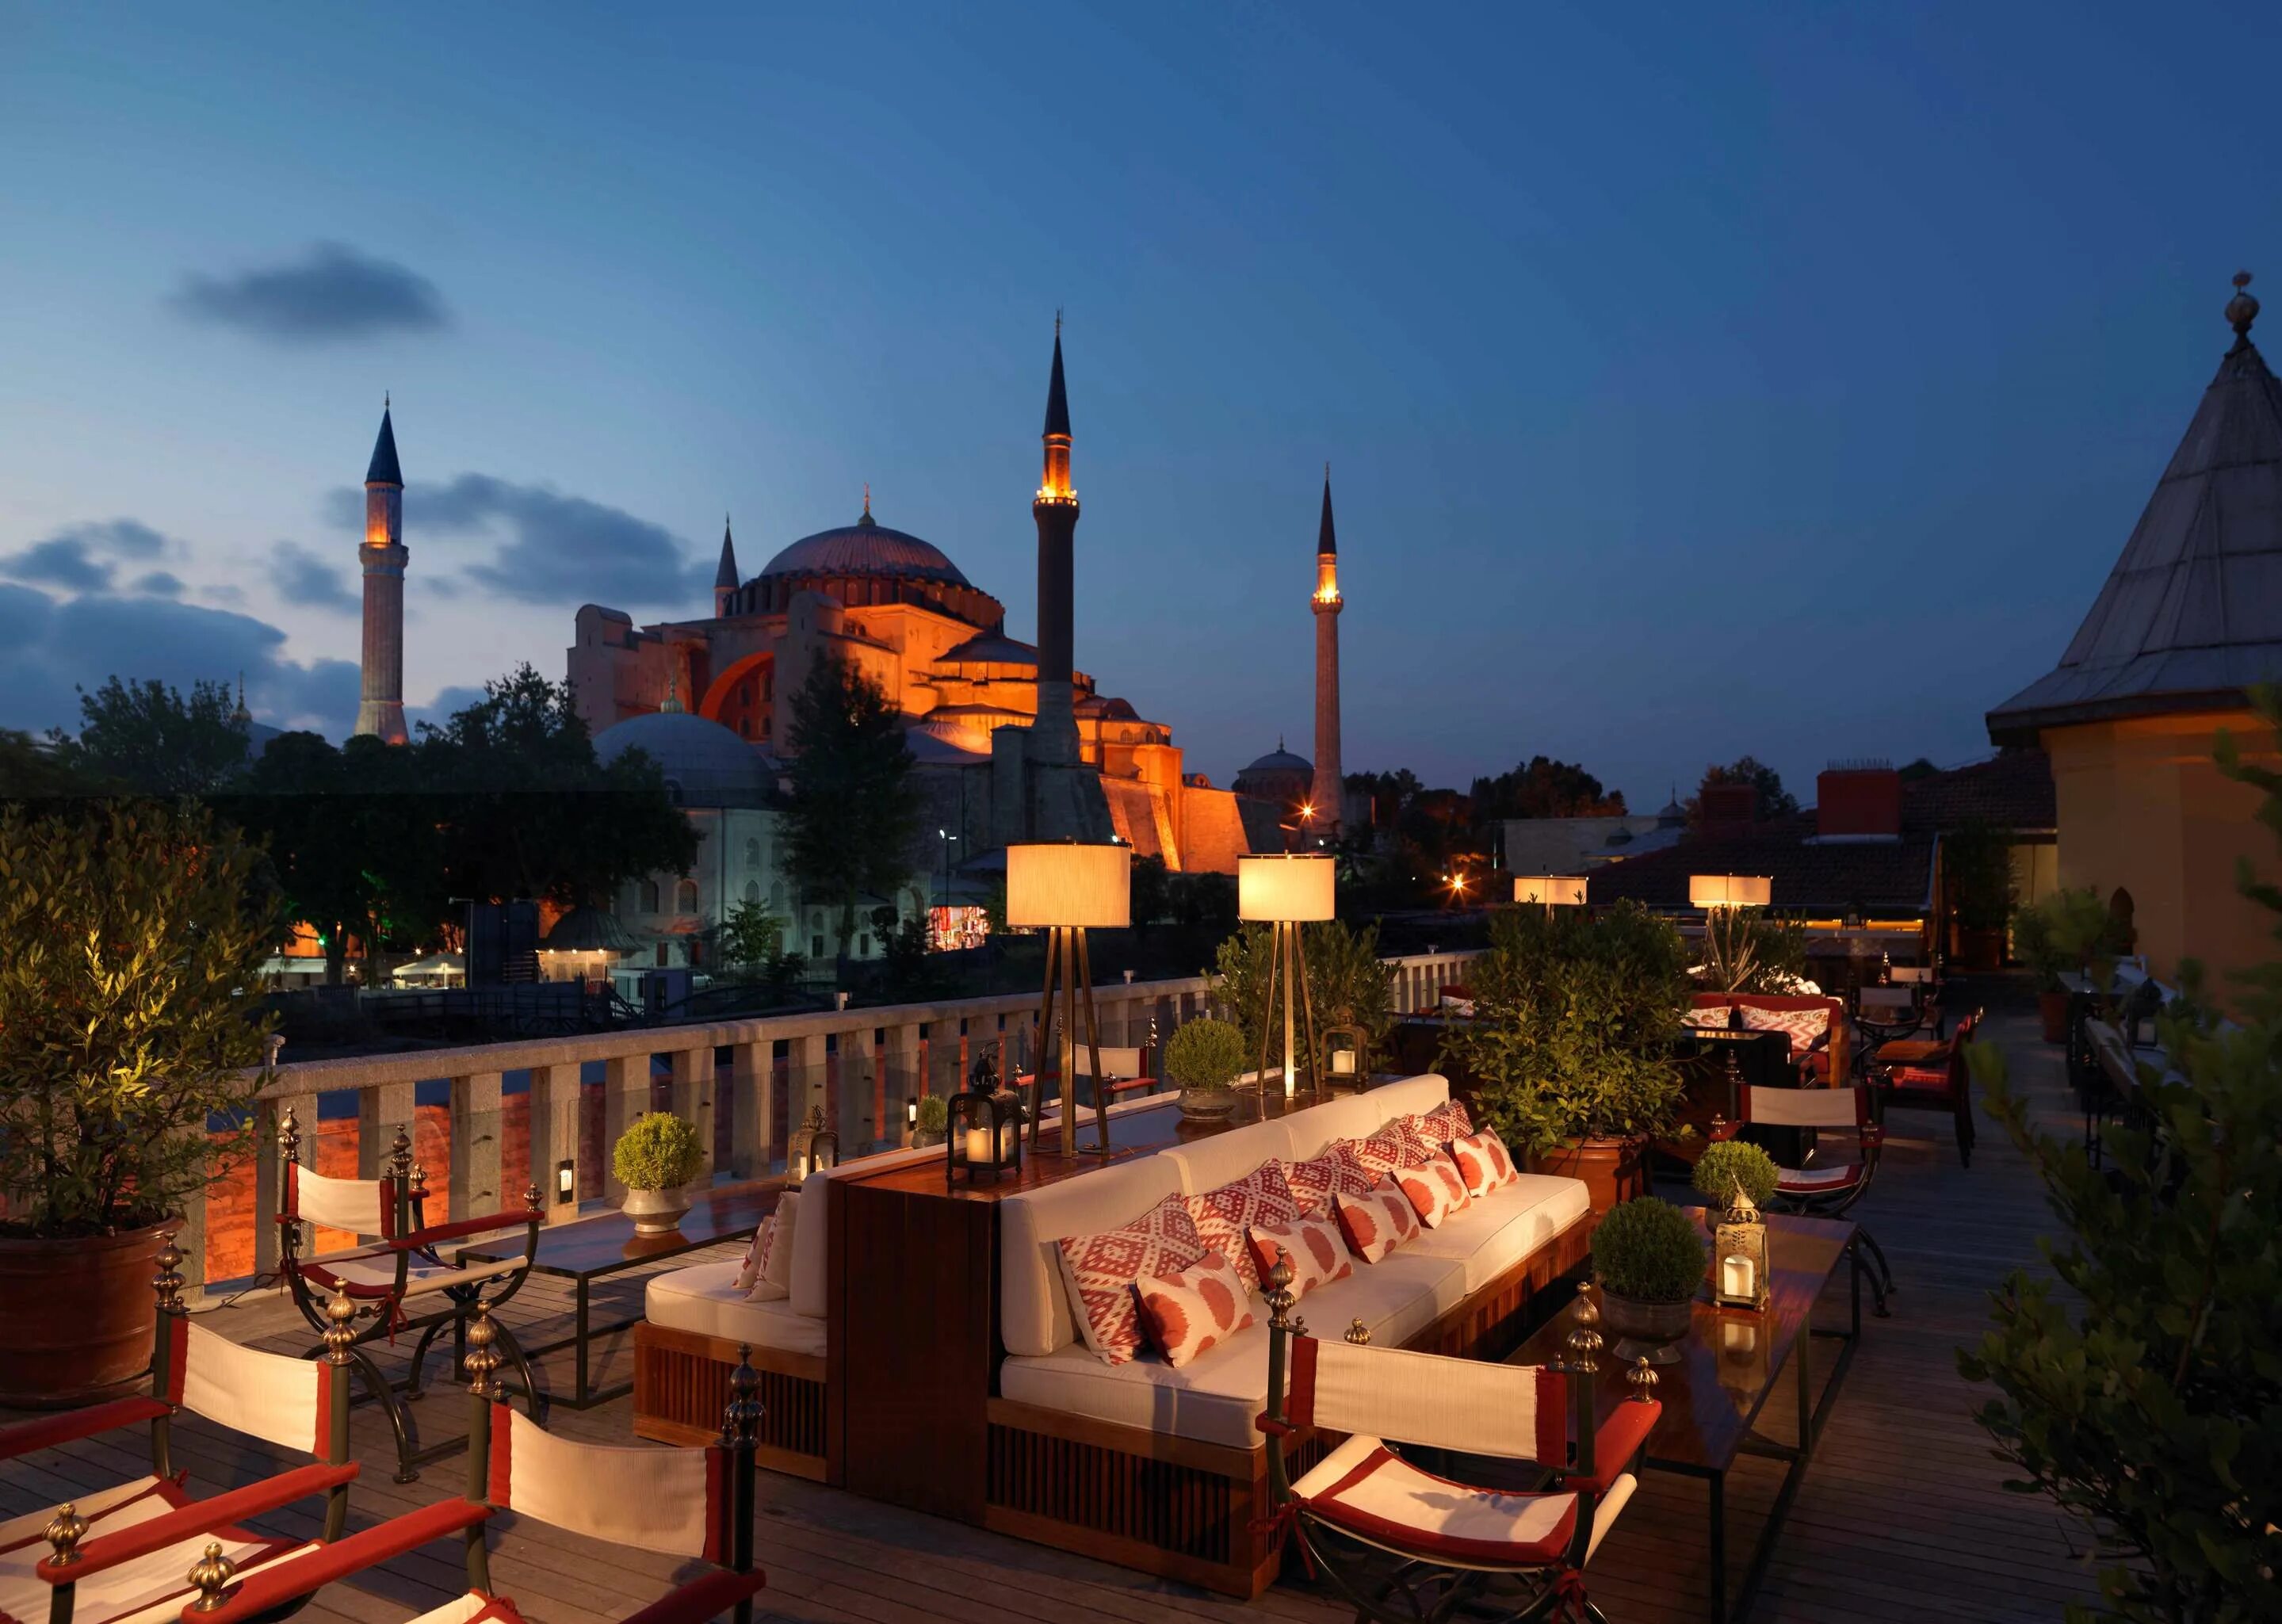 Four Seasons Hotel Стамбул. Султанахмет Стамбул. Four Seasons Hotel Istanbul at Sultanahmet (Стамбул, Турция). Султанахмет Стамбул Топкапи.